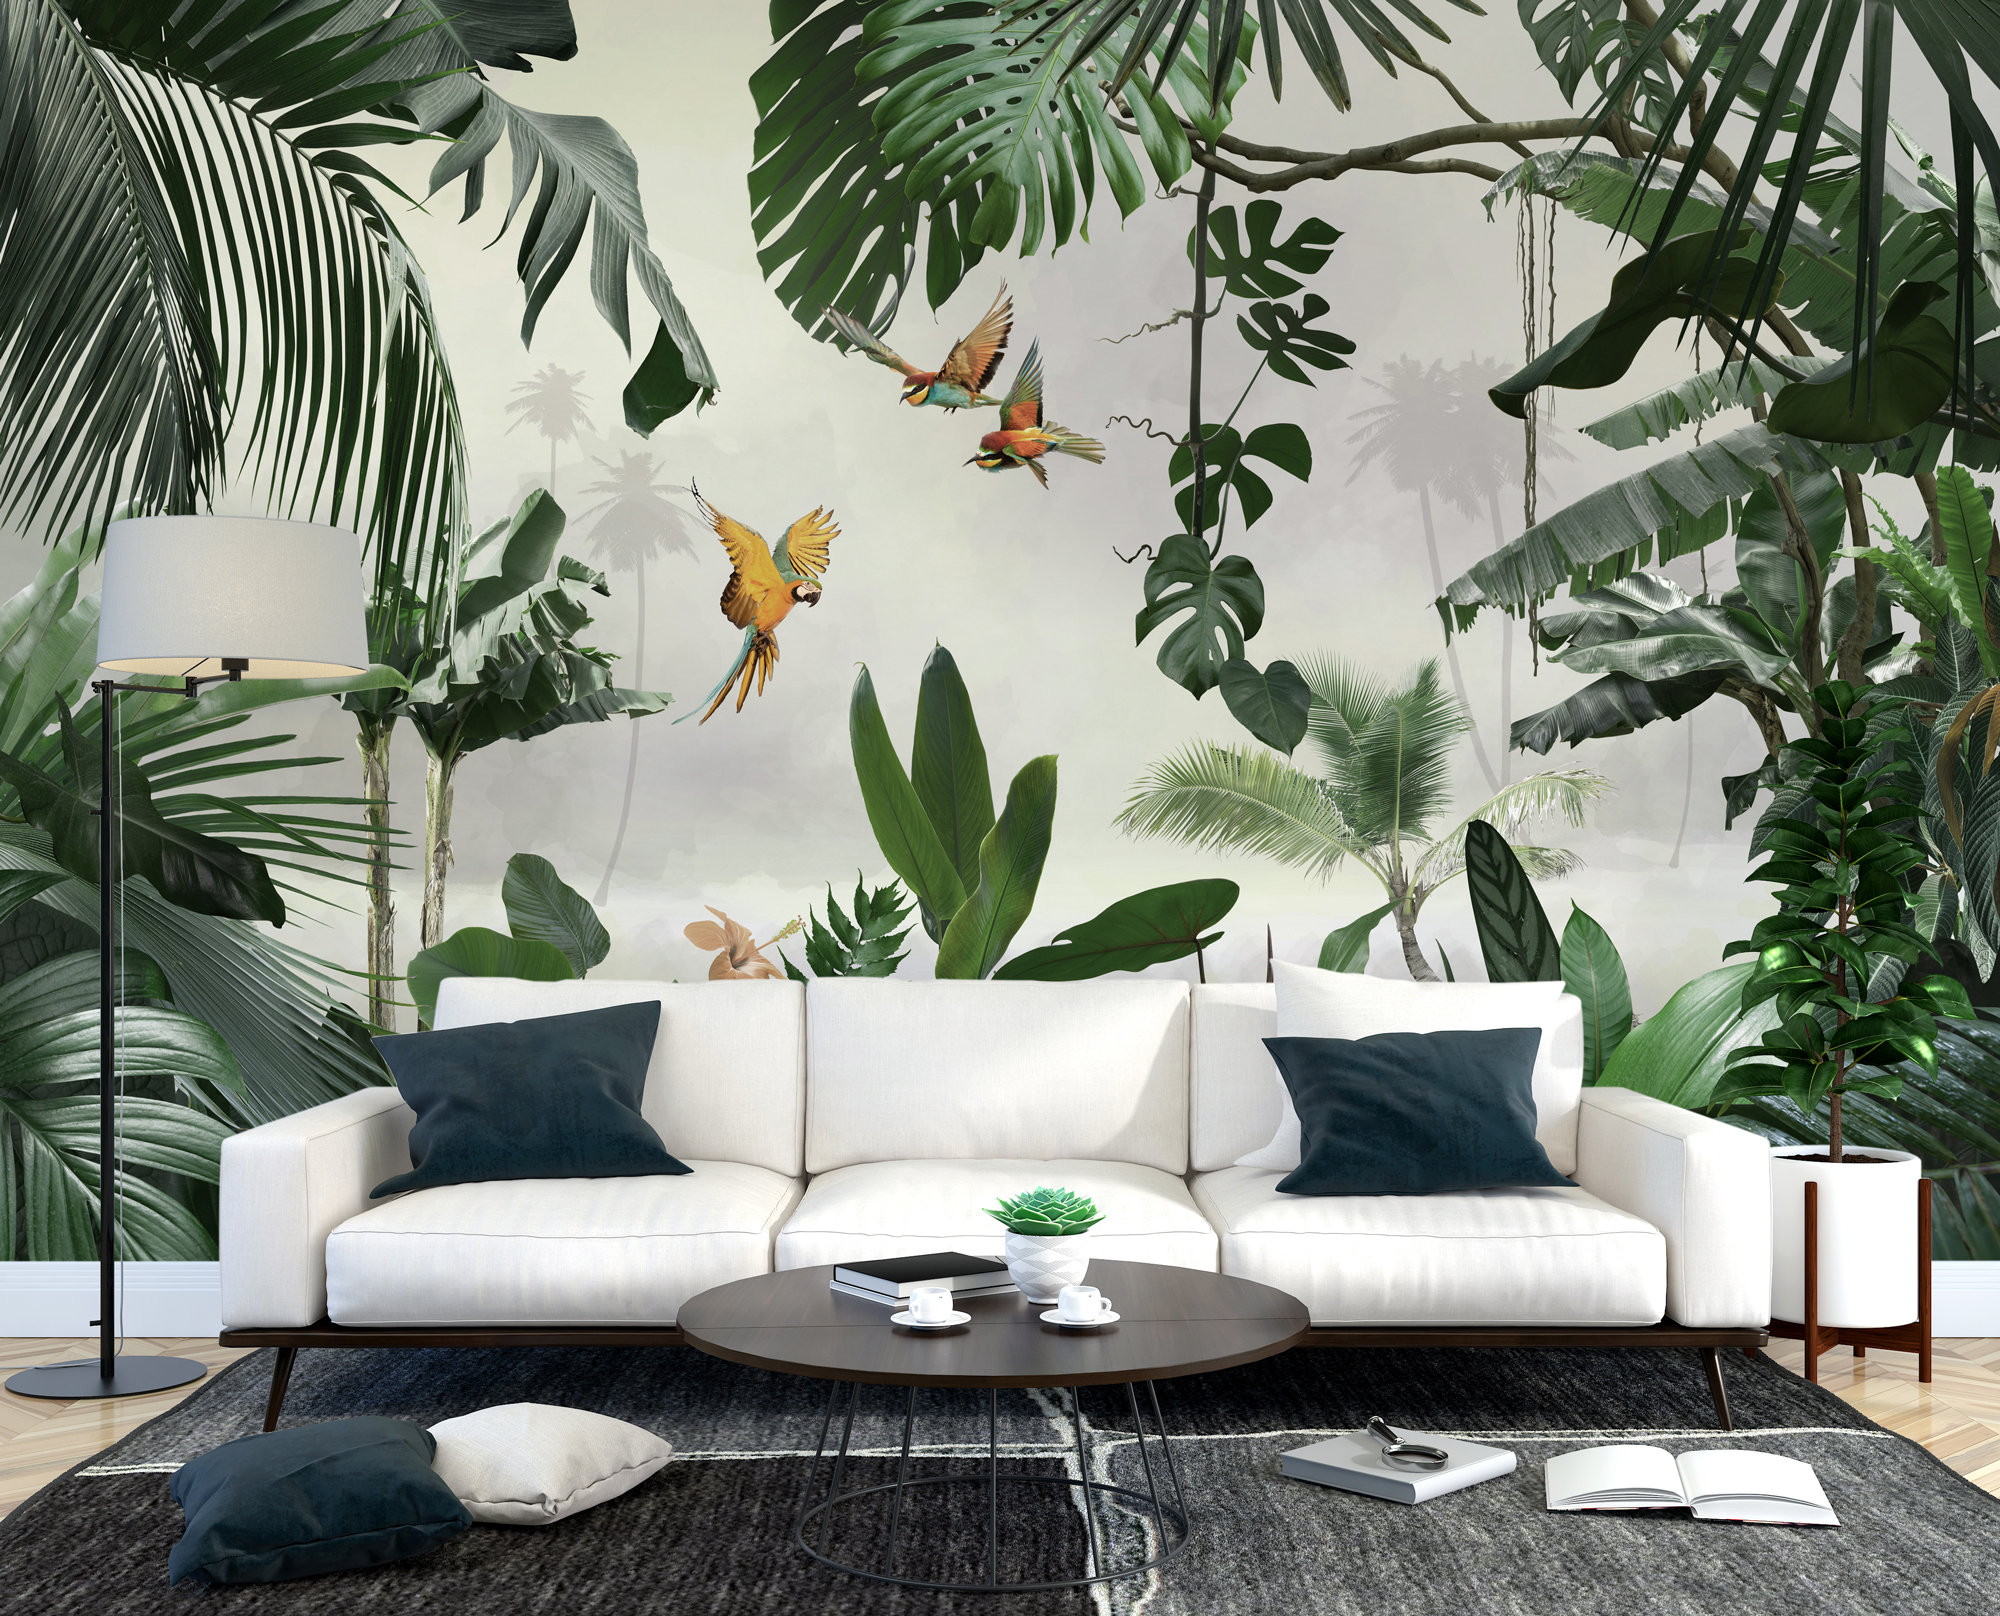 Palm Tree Forest Jungle 3D Wall Mural Australia Removable Wallpaper Murals